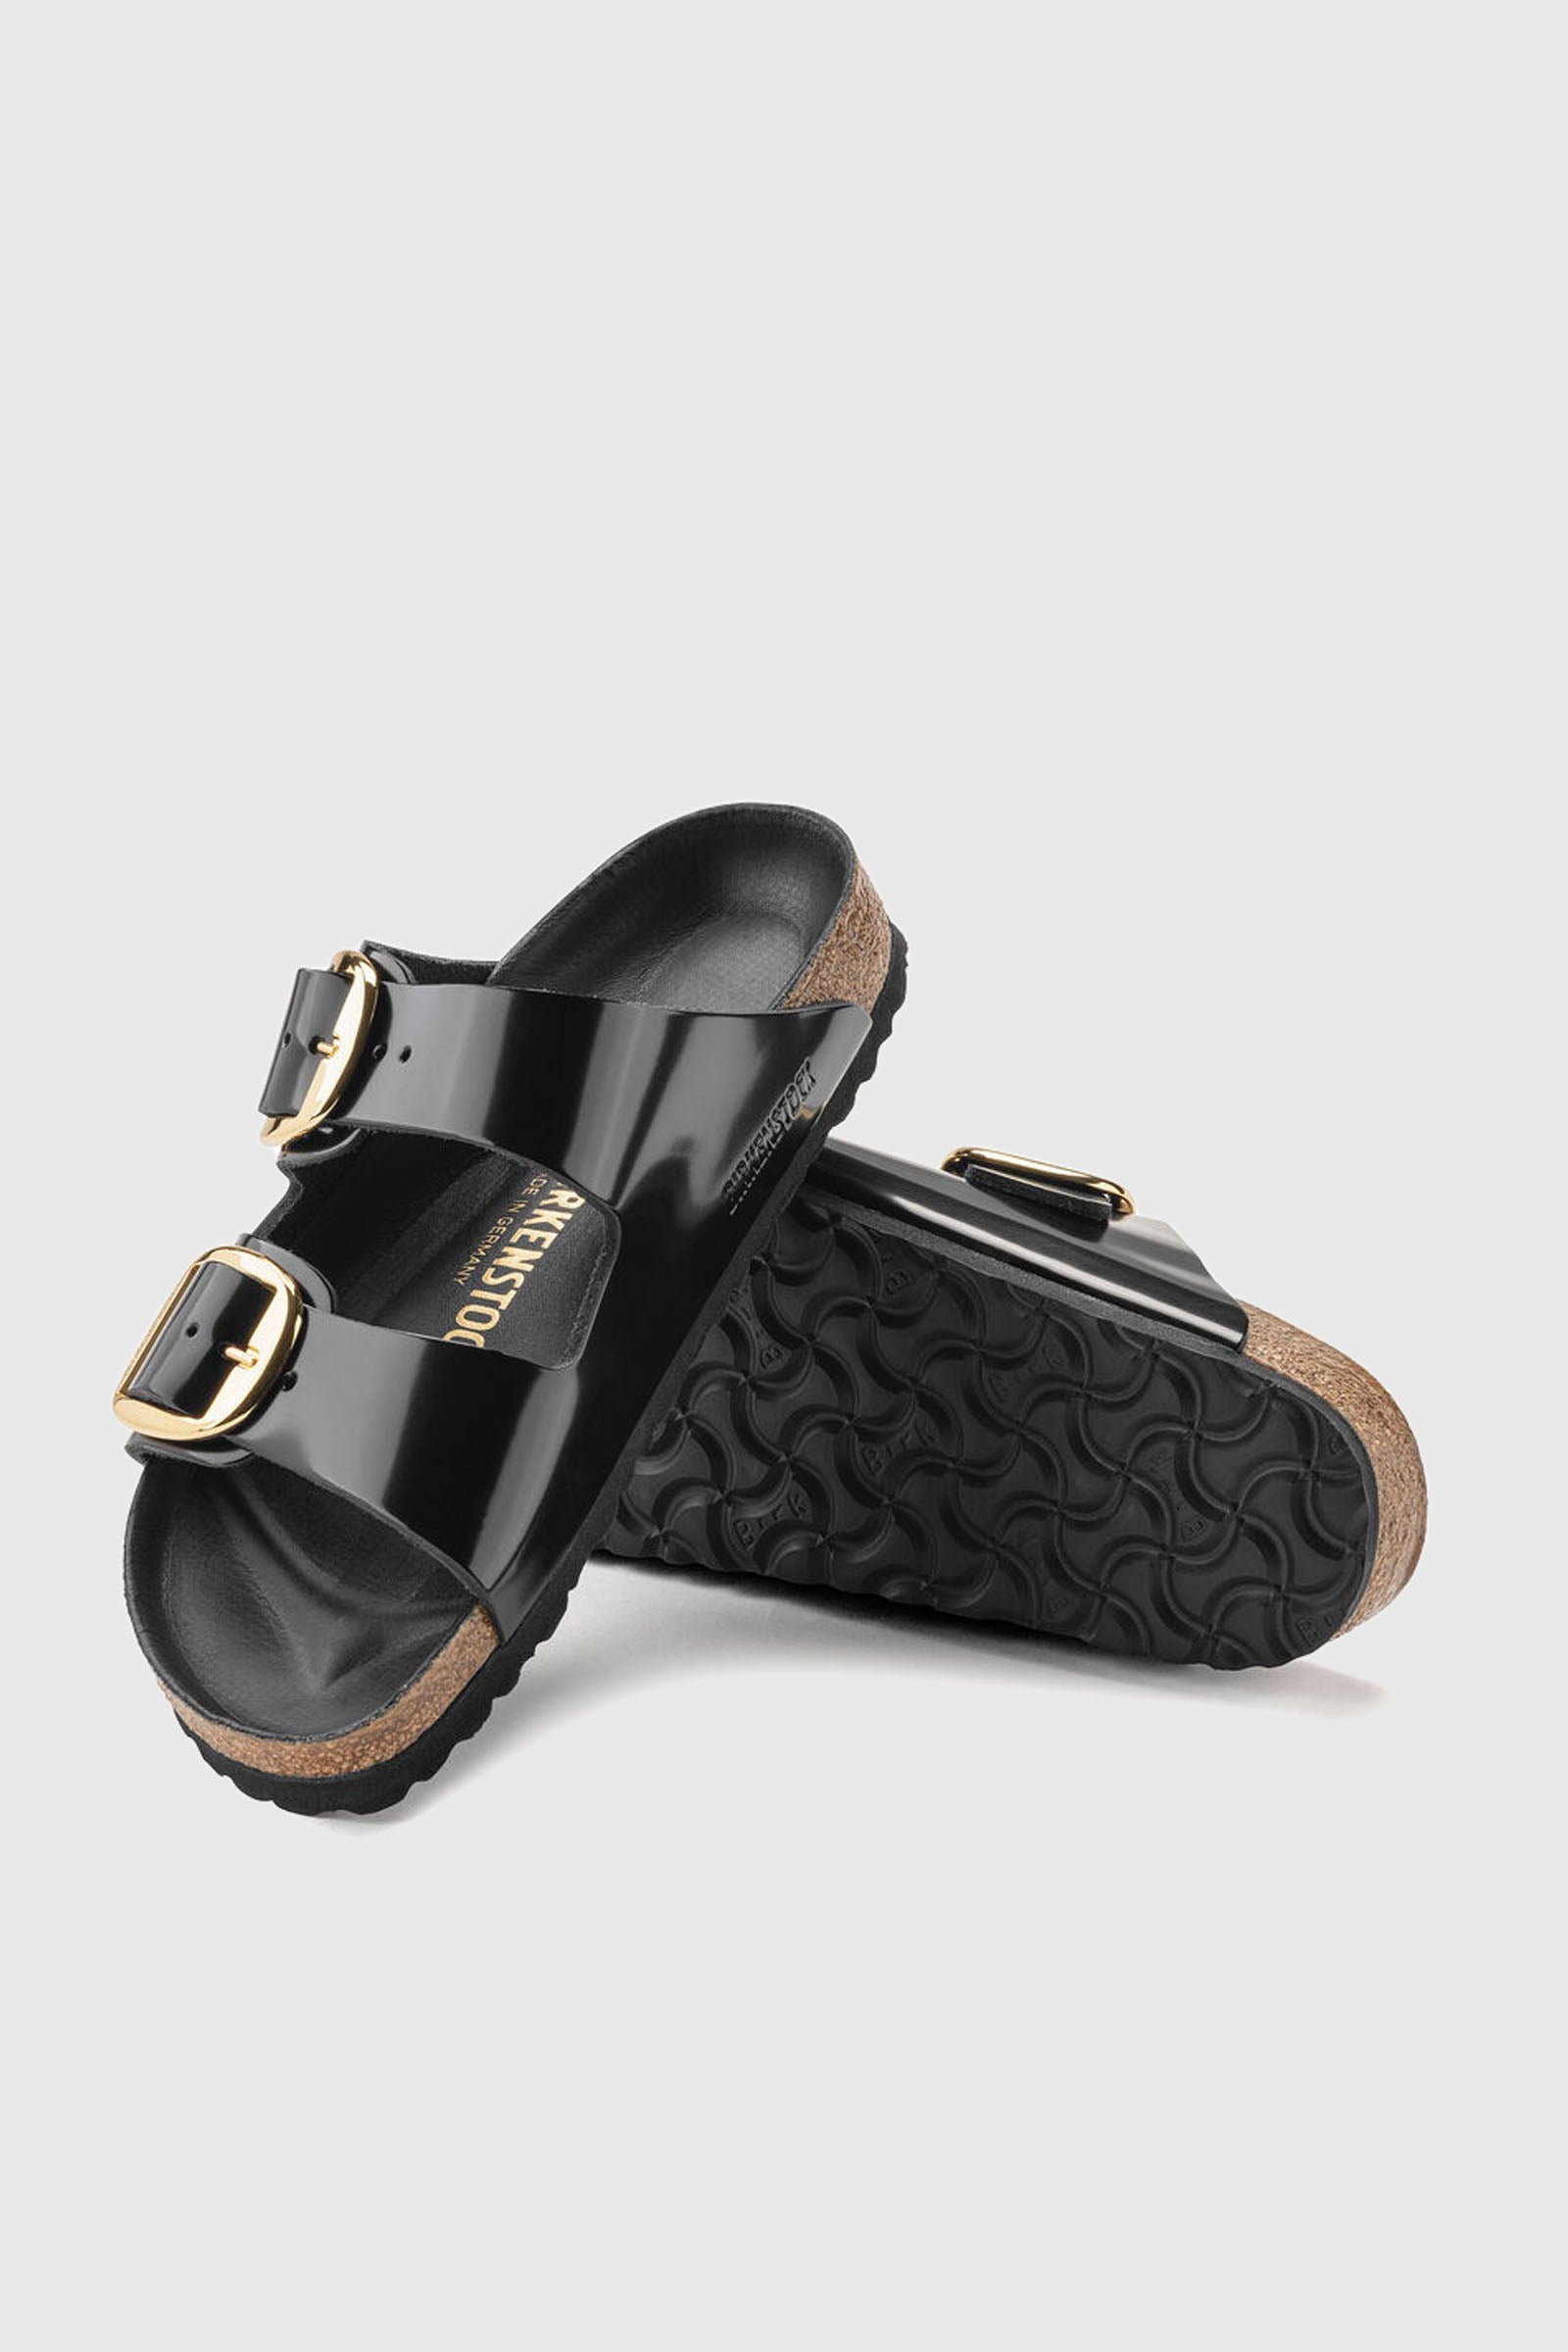 Birkenstock Arizona Leather Sandal Black - 7